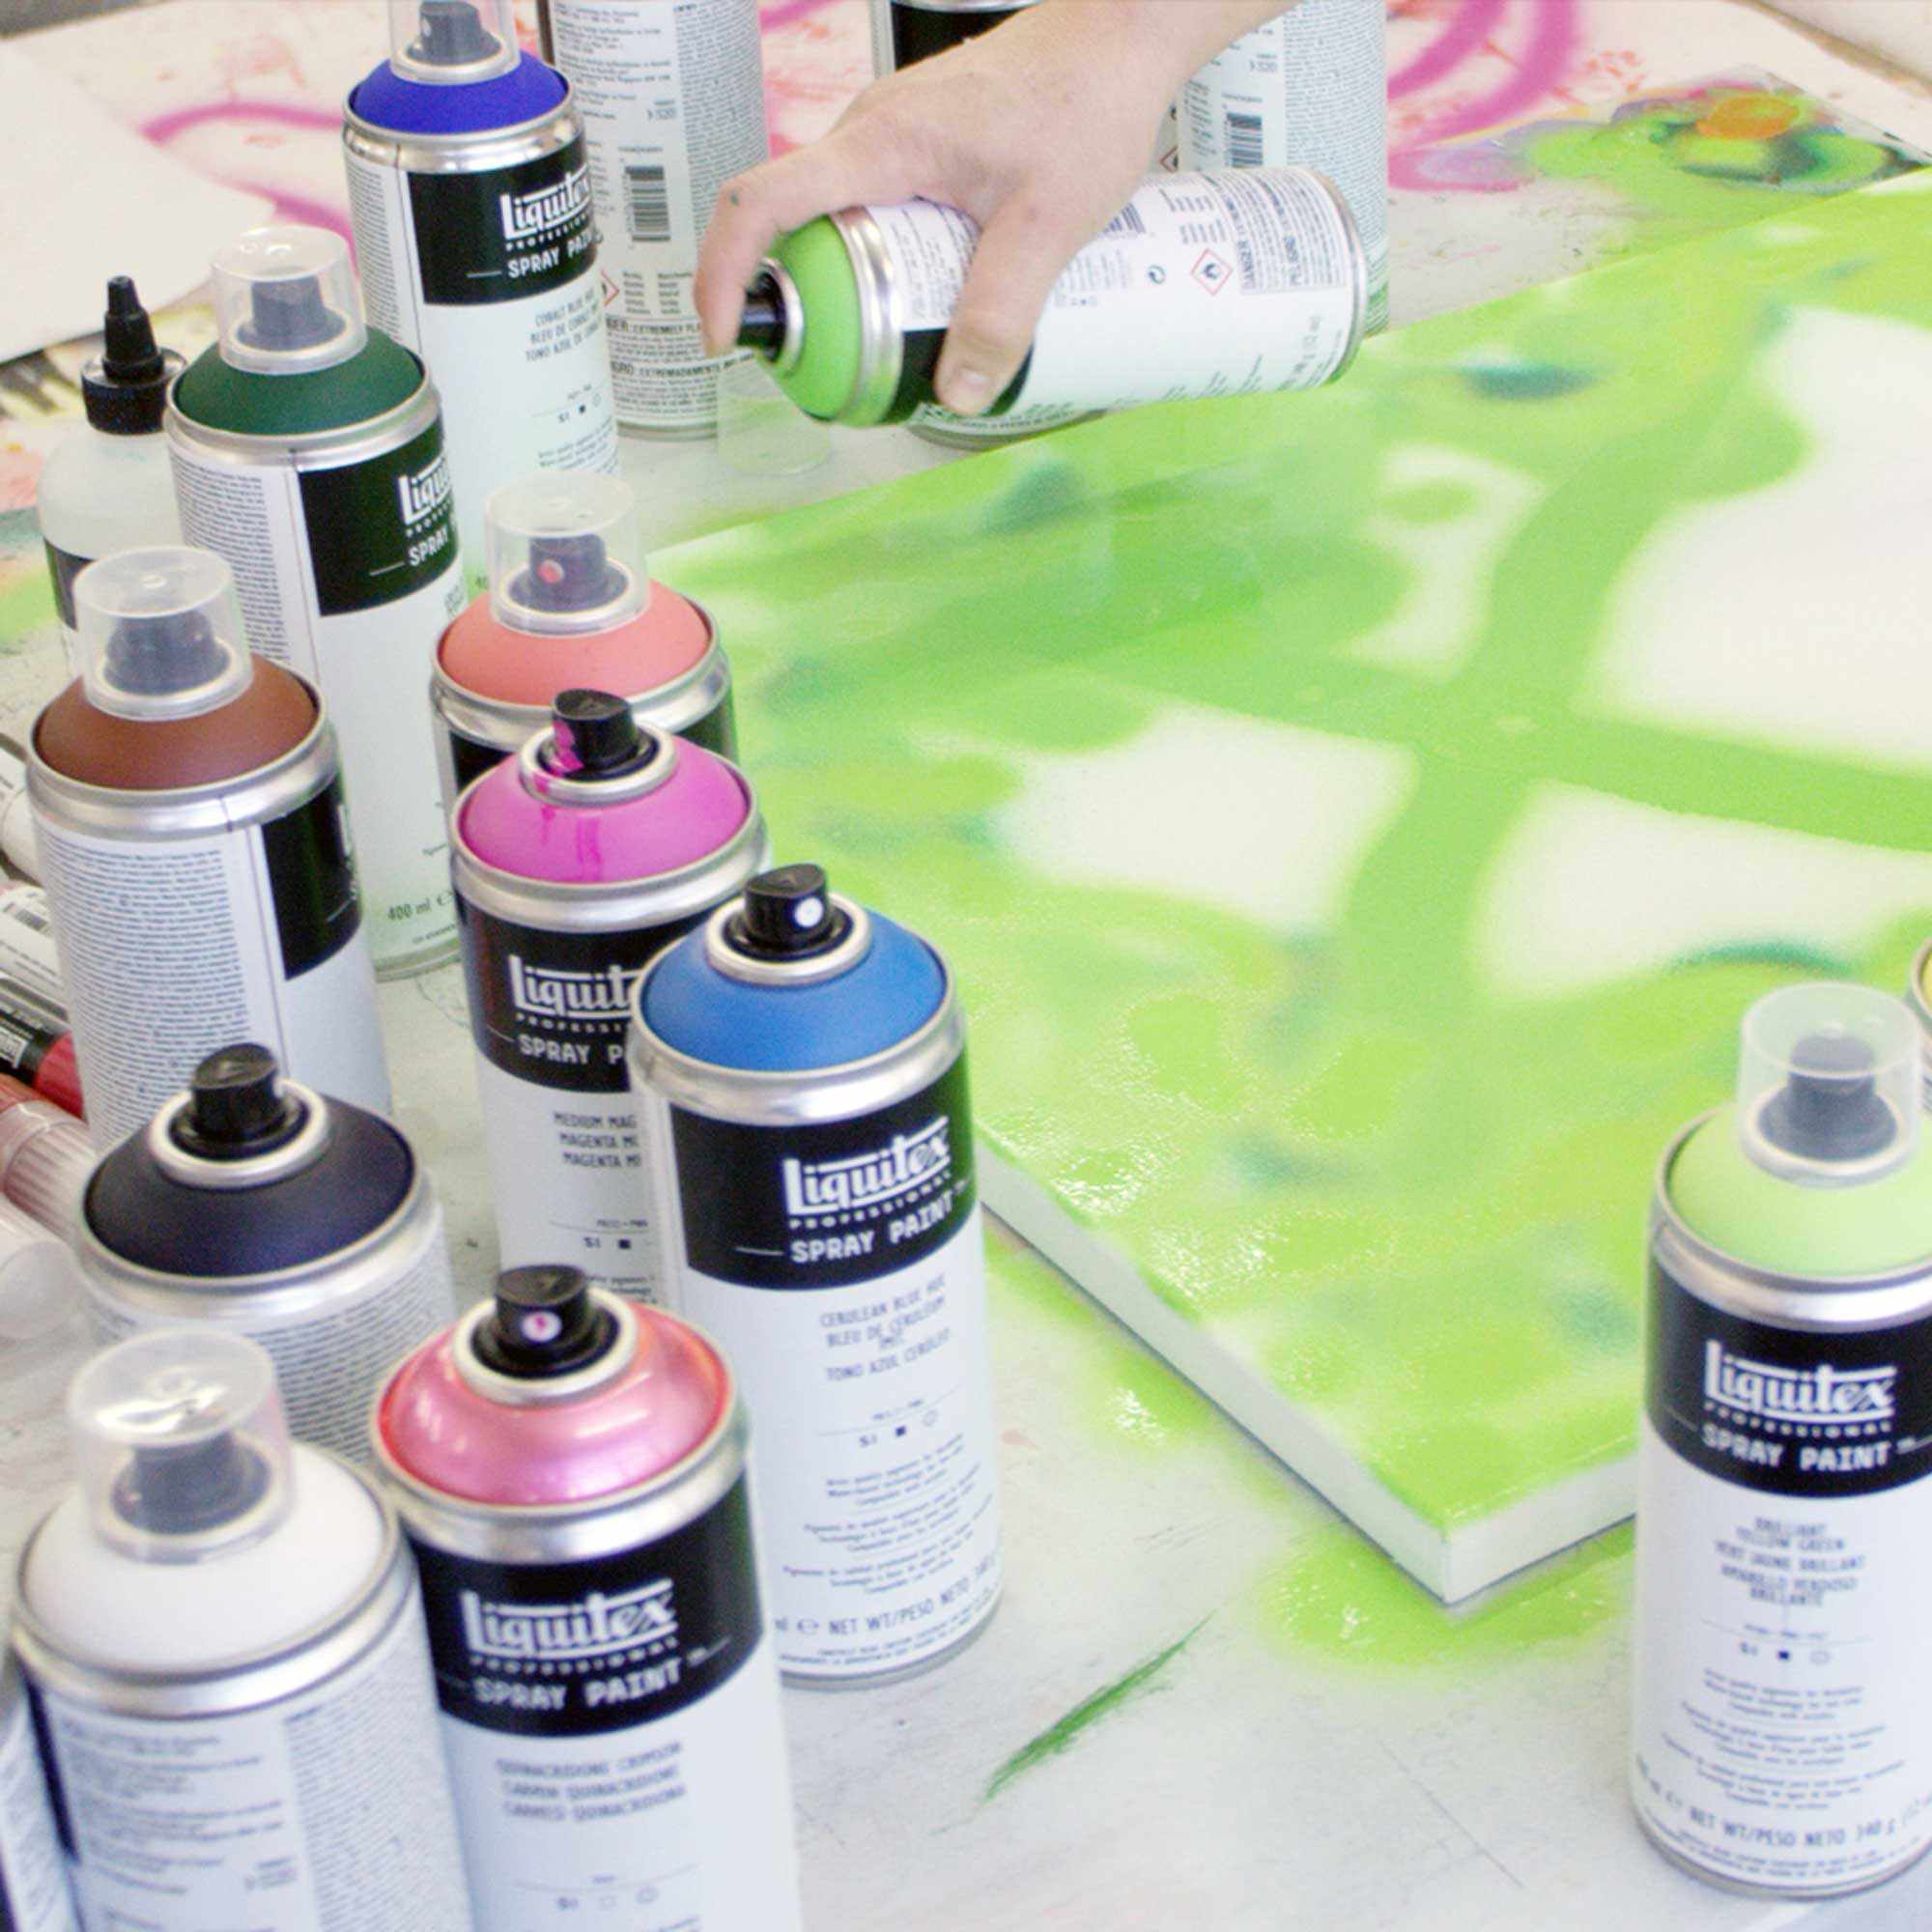 Liquitex Spray Paint 400ml SERIES 1 in use